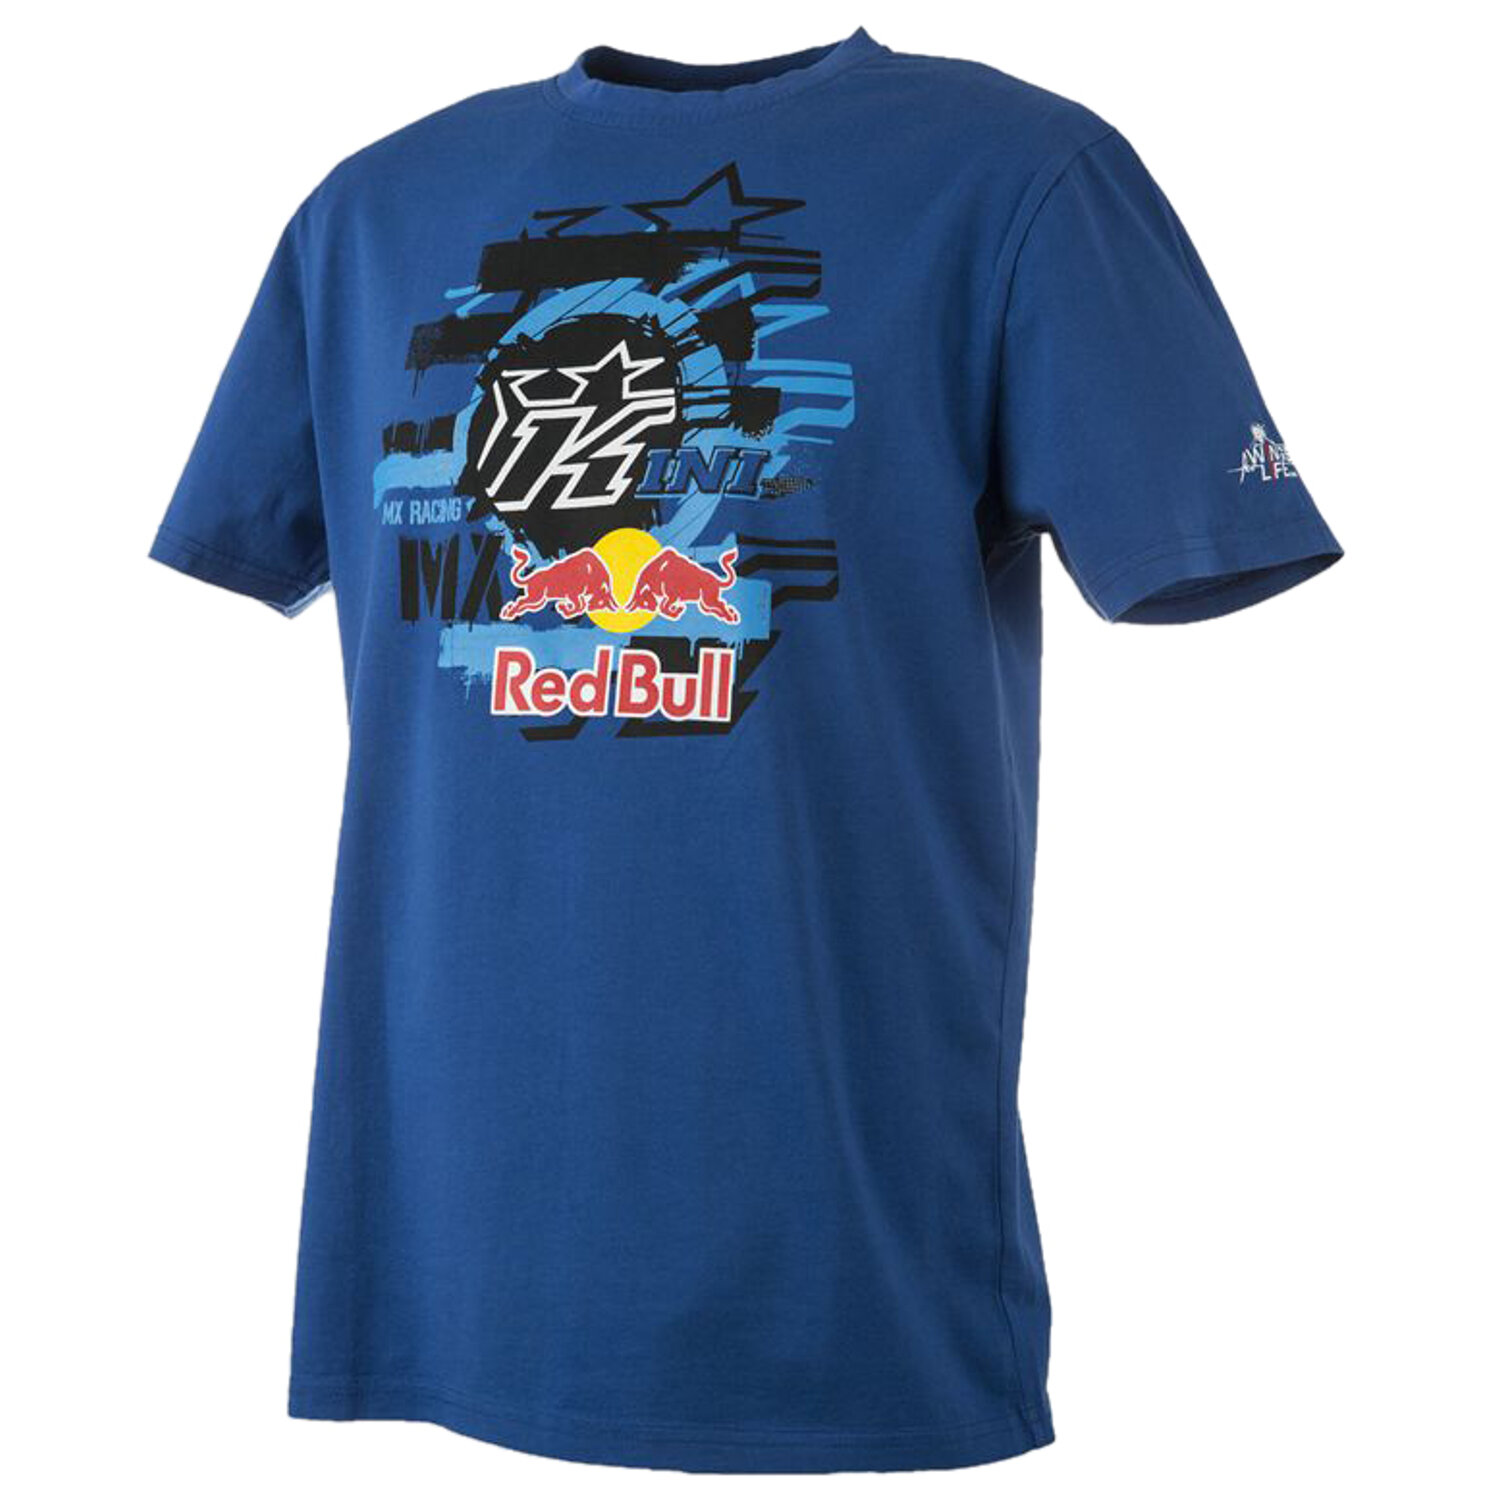 Kini Red Bull Enfant T-Shirt Layered Navy